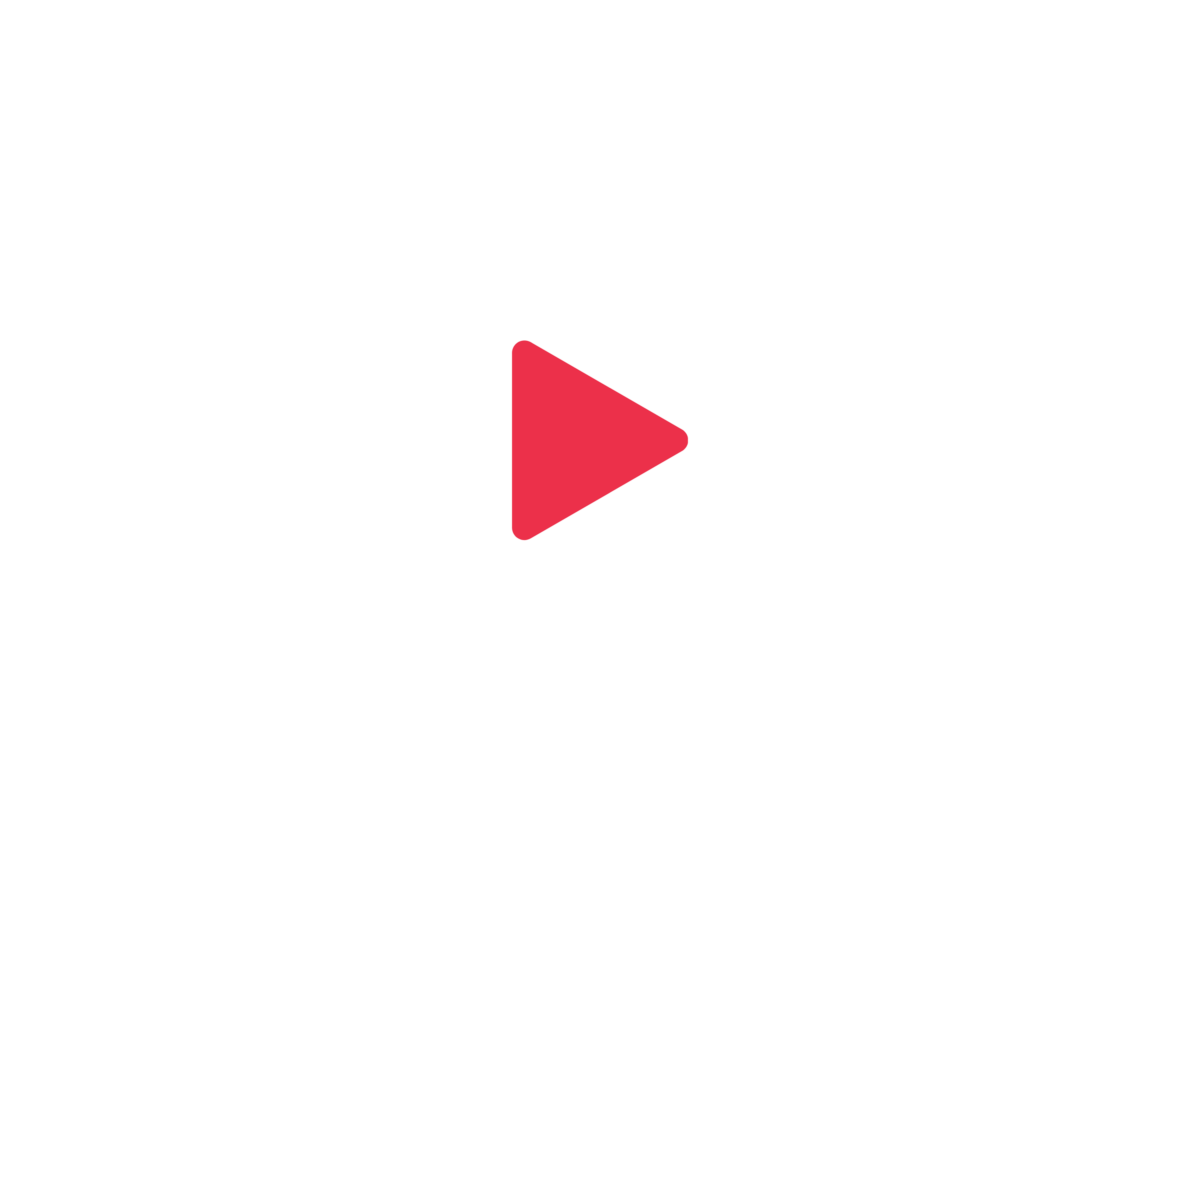 Fanlist Logo / White Transparent Background